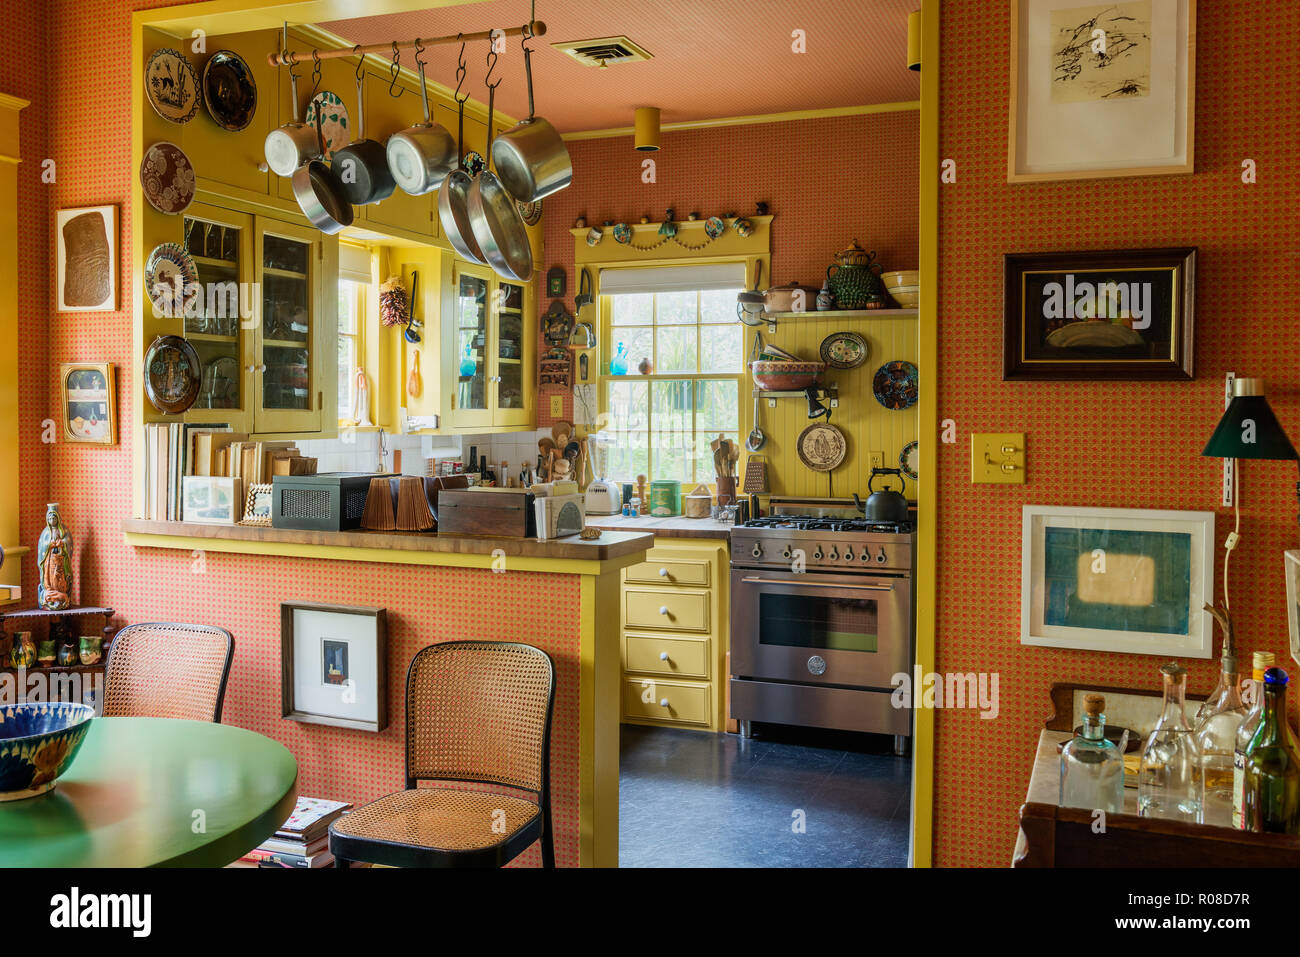 Retro kitchen with orange and yellow color scheme Stock Photo